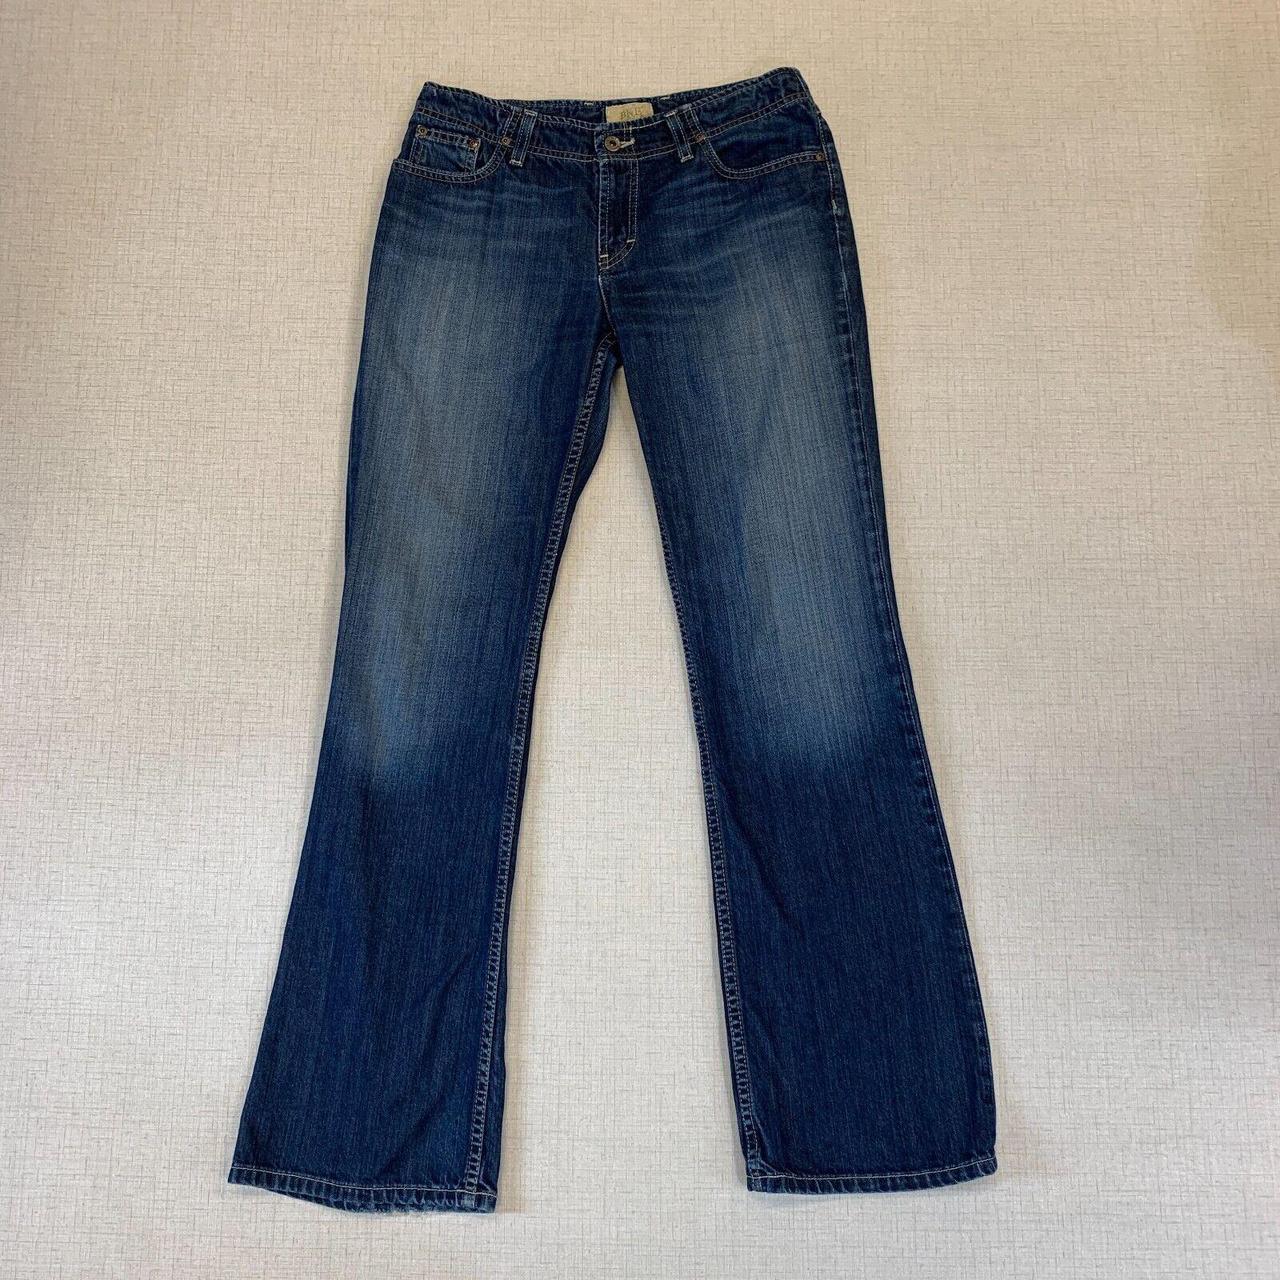 Buckle BKE Denim Whitney Jeans Womens 29 Dark Wash... - Depop